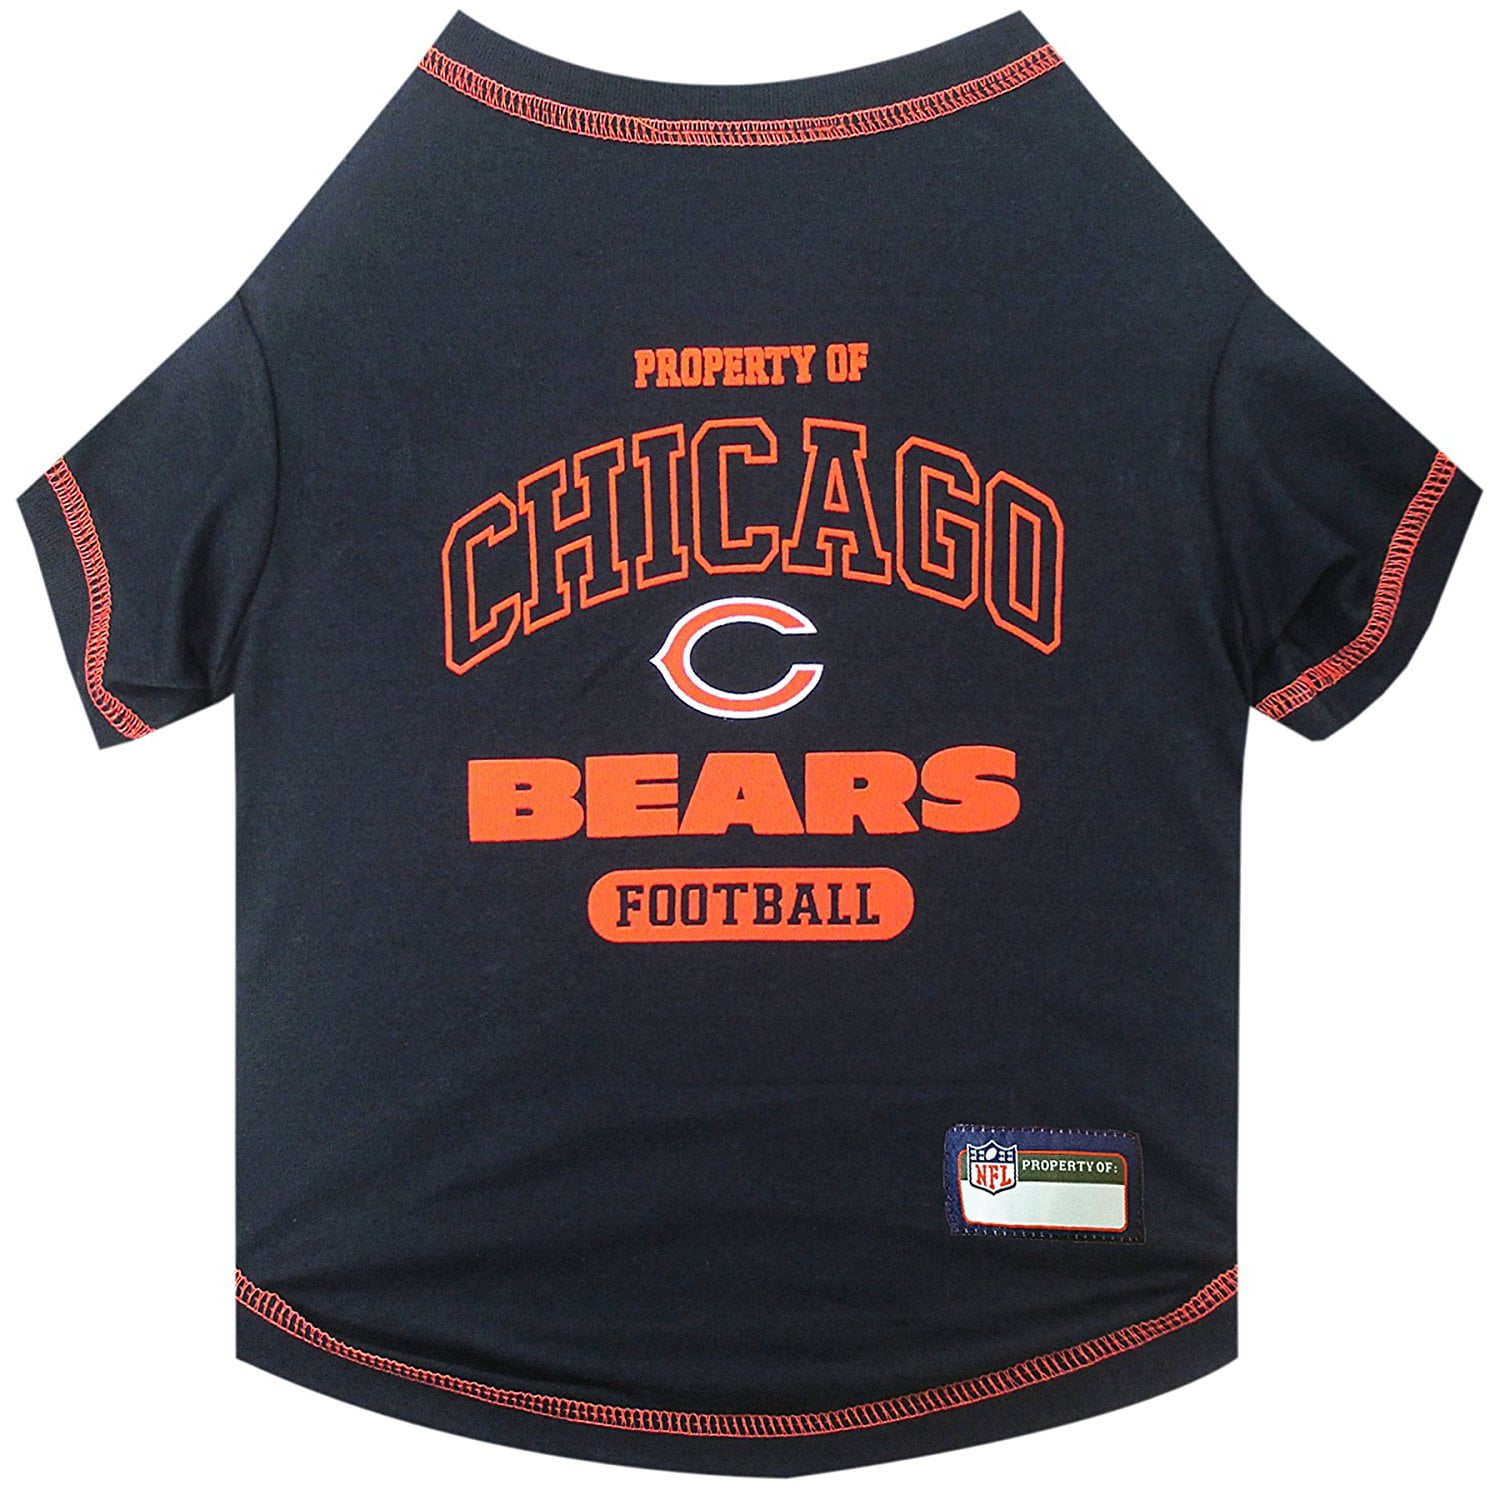 cool chicago bears shirts